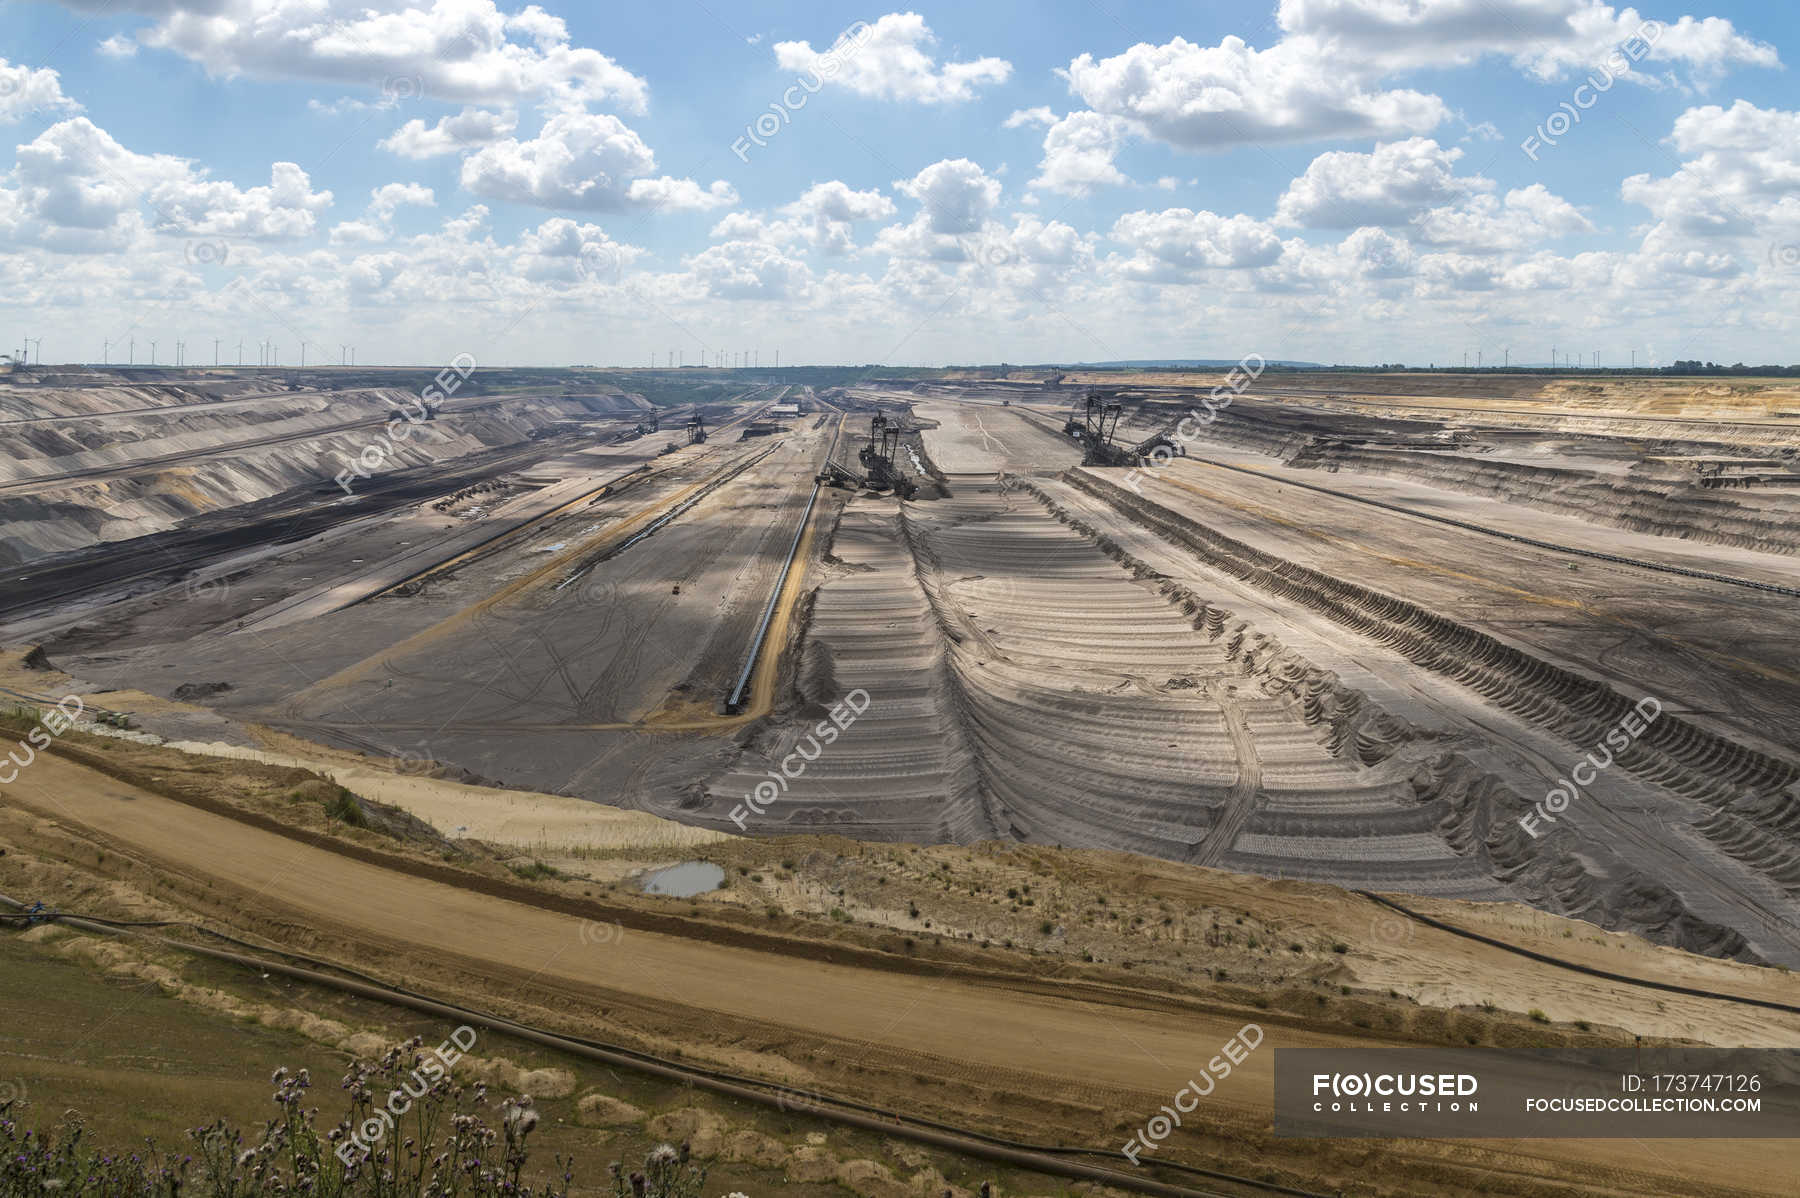 Germany, Grevenbroich, Garzweiler surface mine — brown coal mining ...